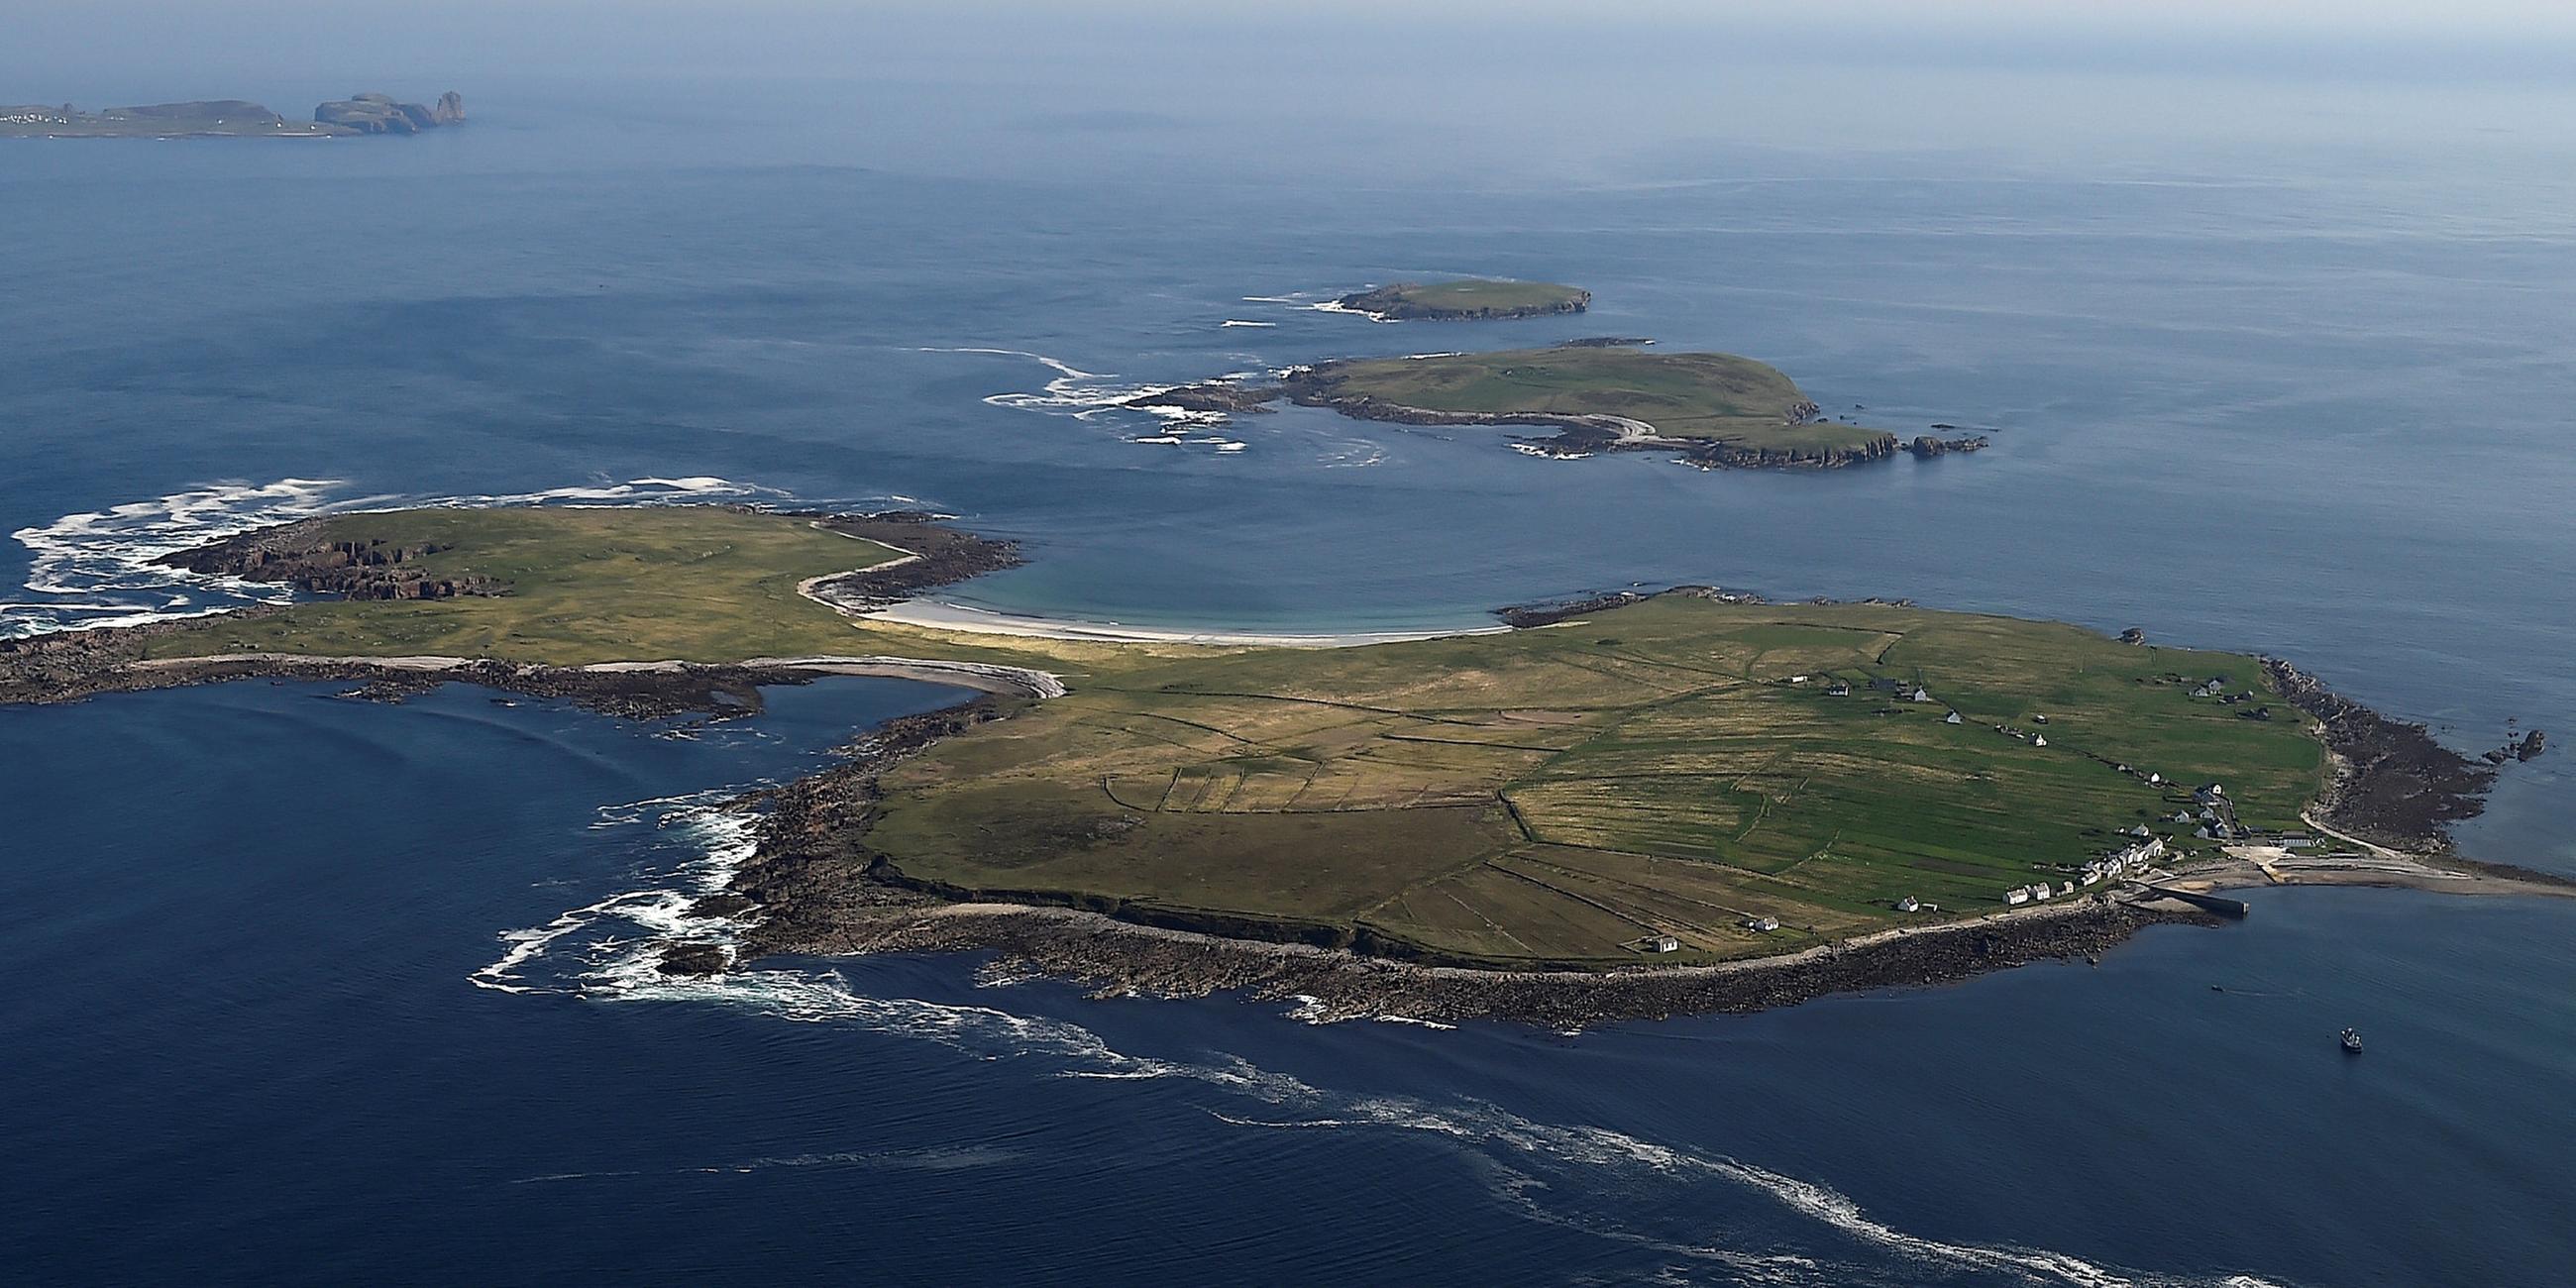 Irland, Inishbofin: Die Insel Inishbofin im County Donegal, fotografiert aus einem Helikopter.